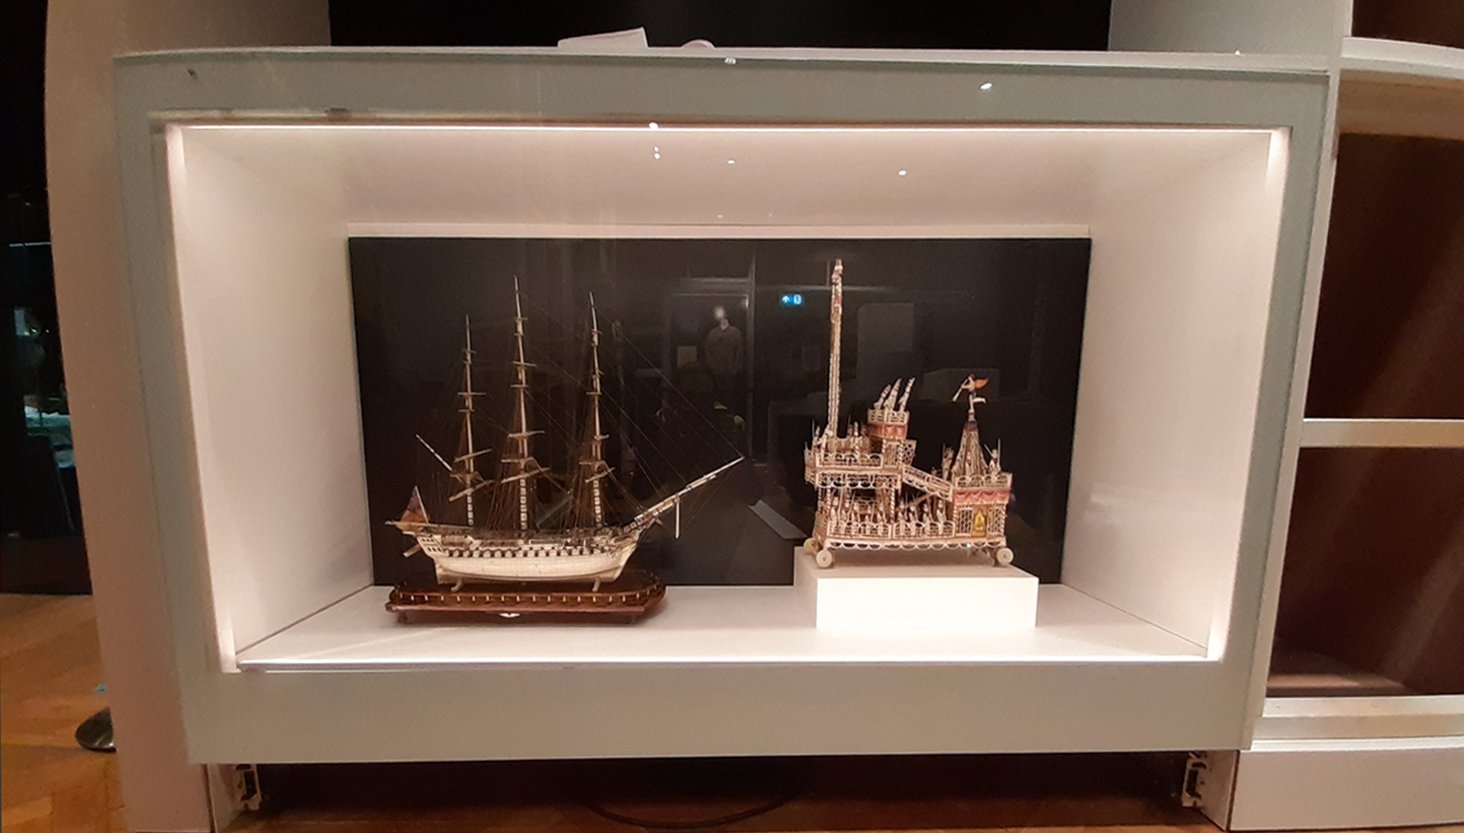 Bone model of a ship in a display case